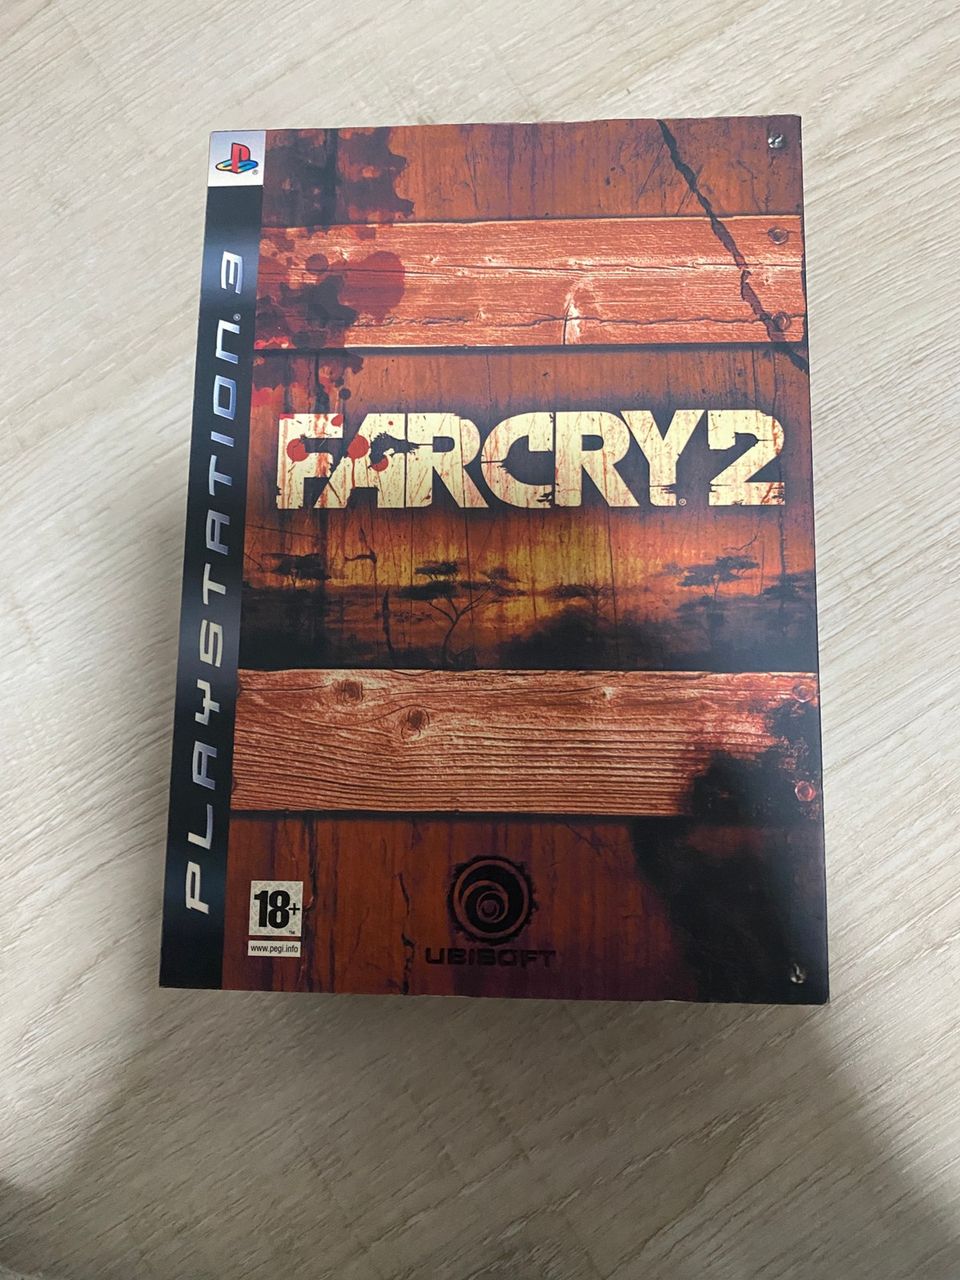 Far cry 2 collectors edition